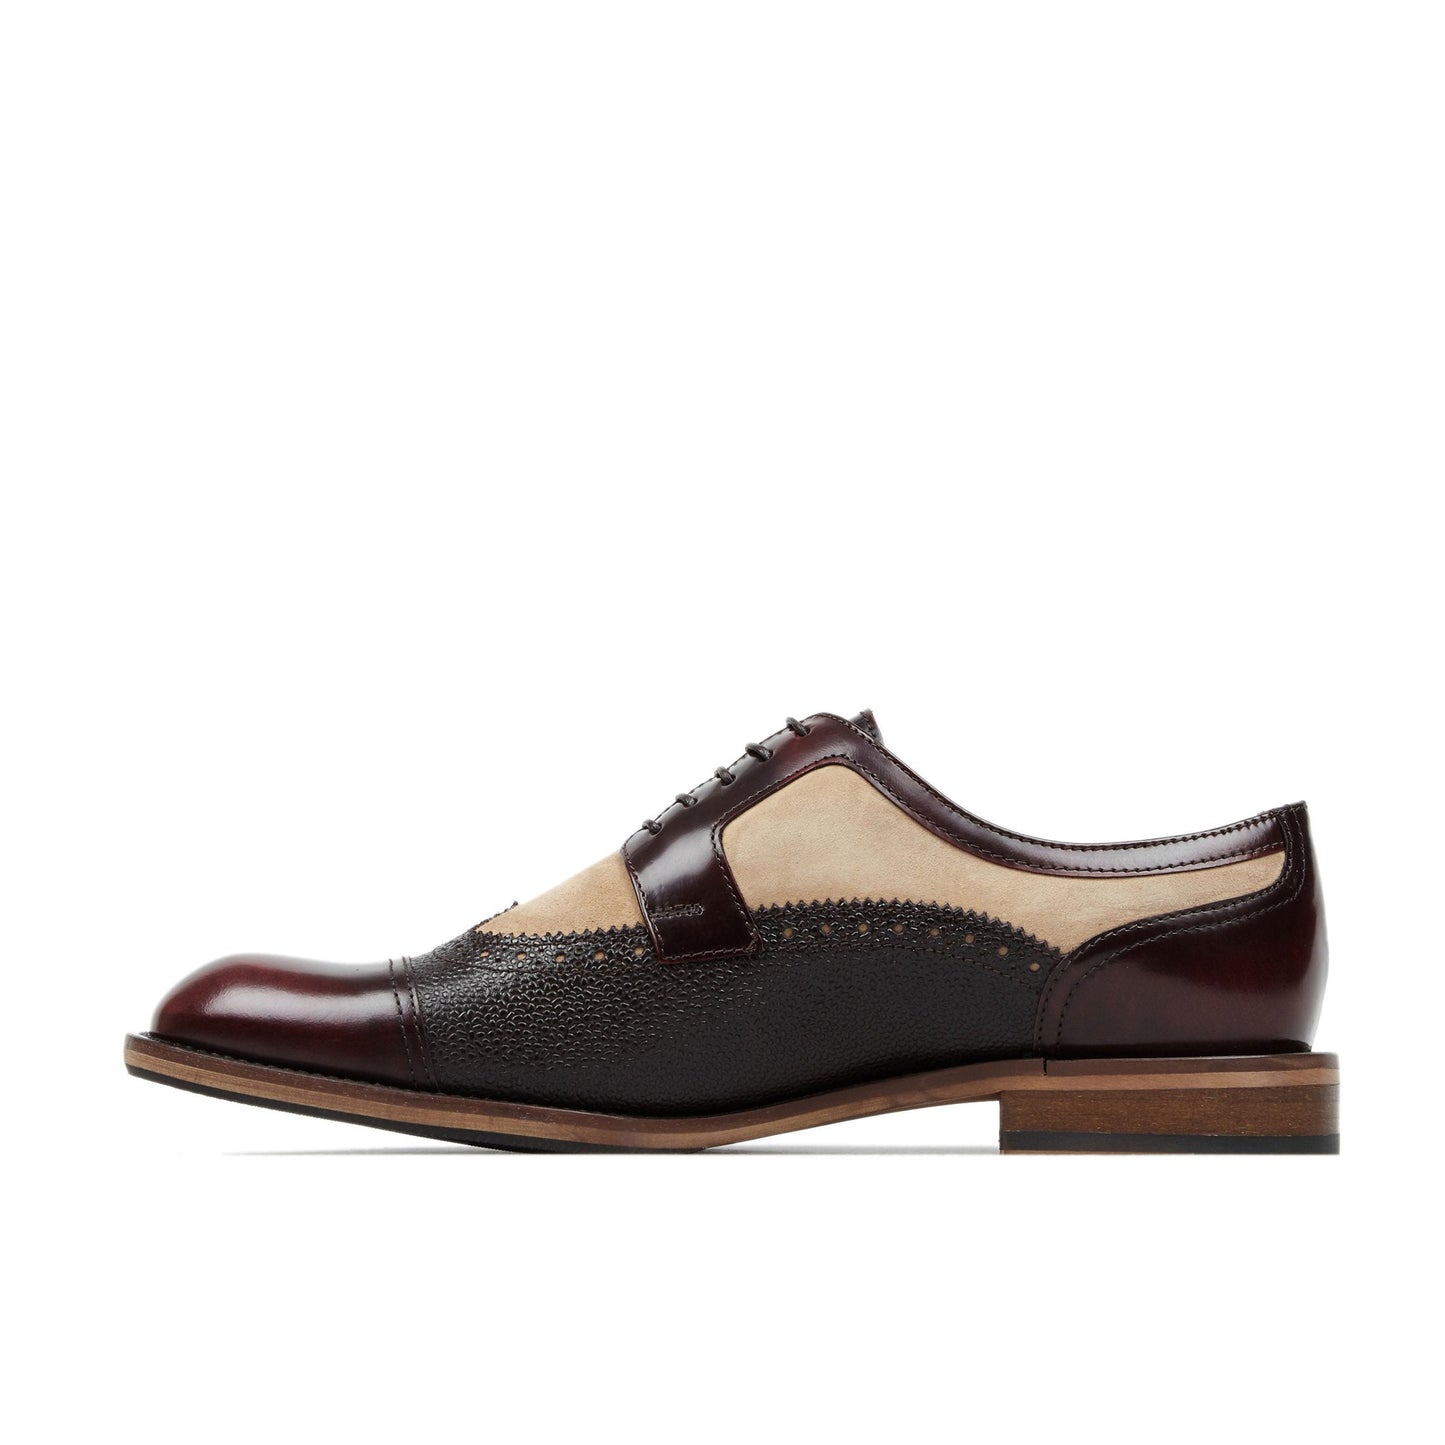 Orlando - Burgundy, Beige, Dark Brown Shoes Embassy London 